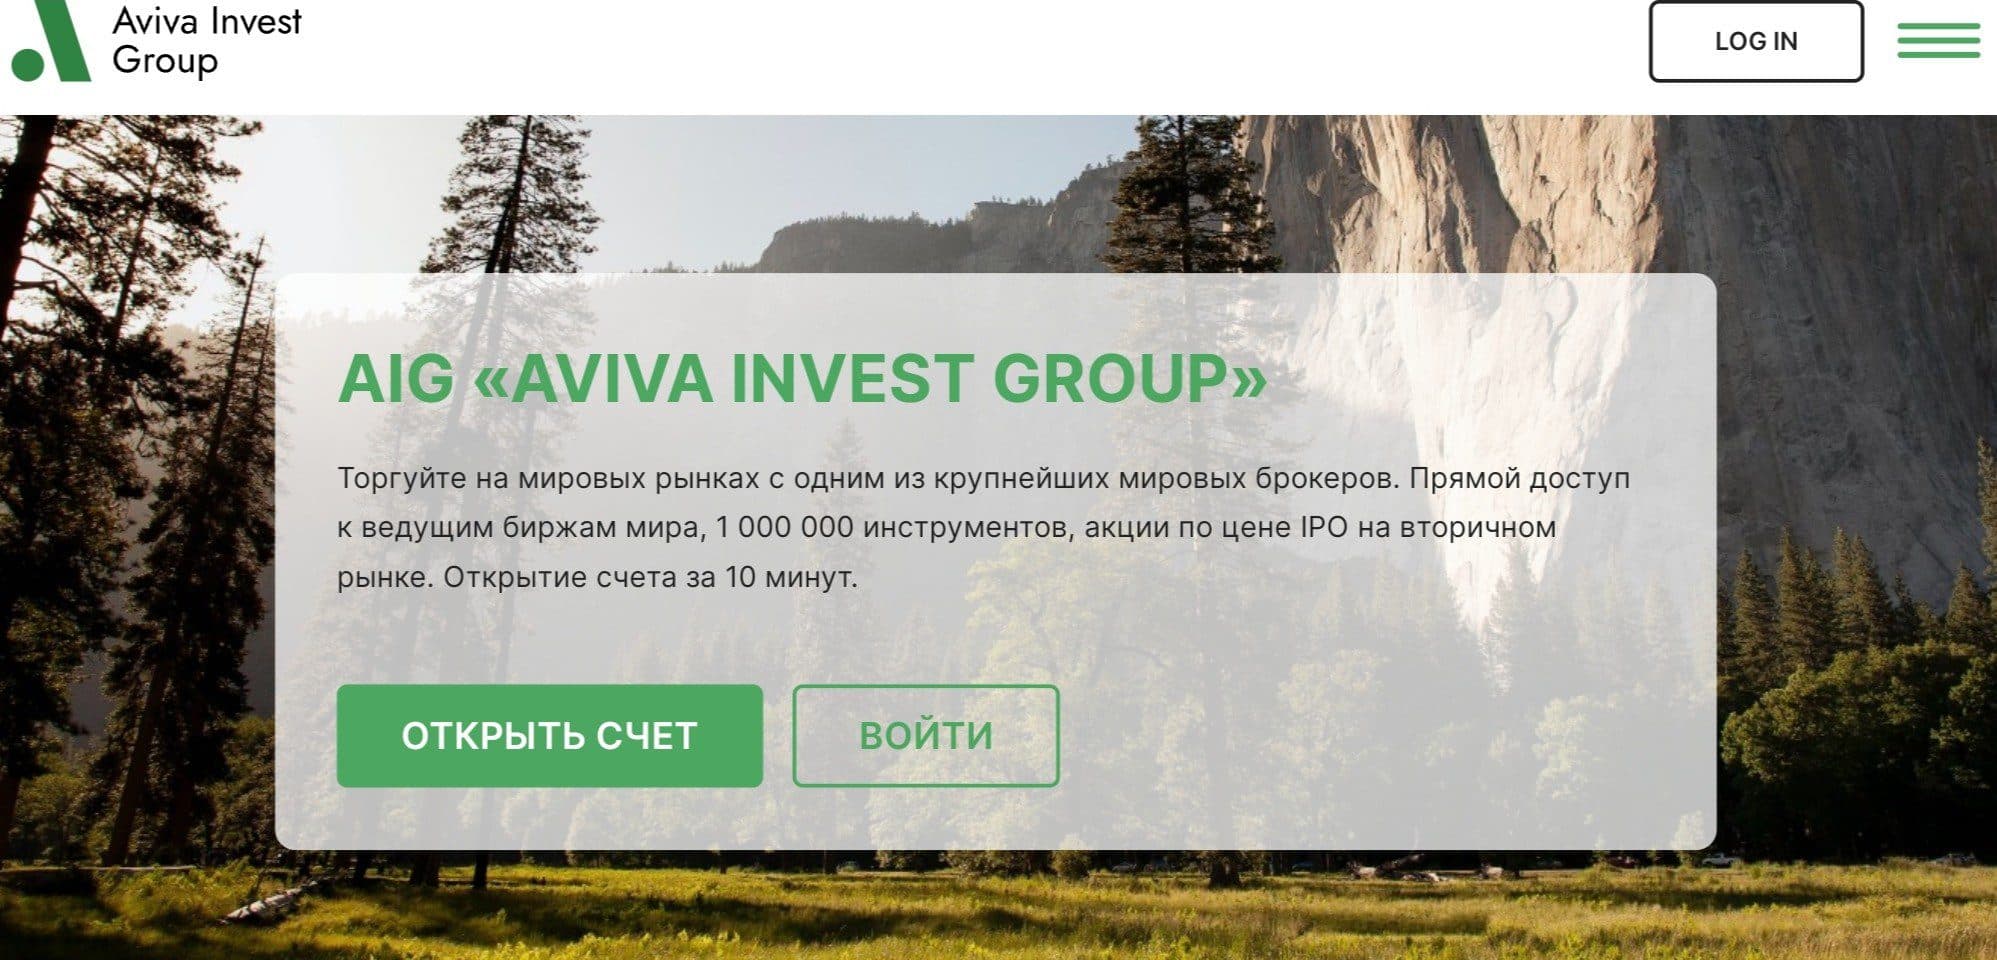 Aviva Invest Group сайт обзор